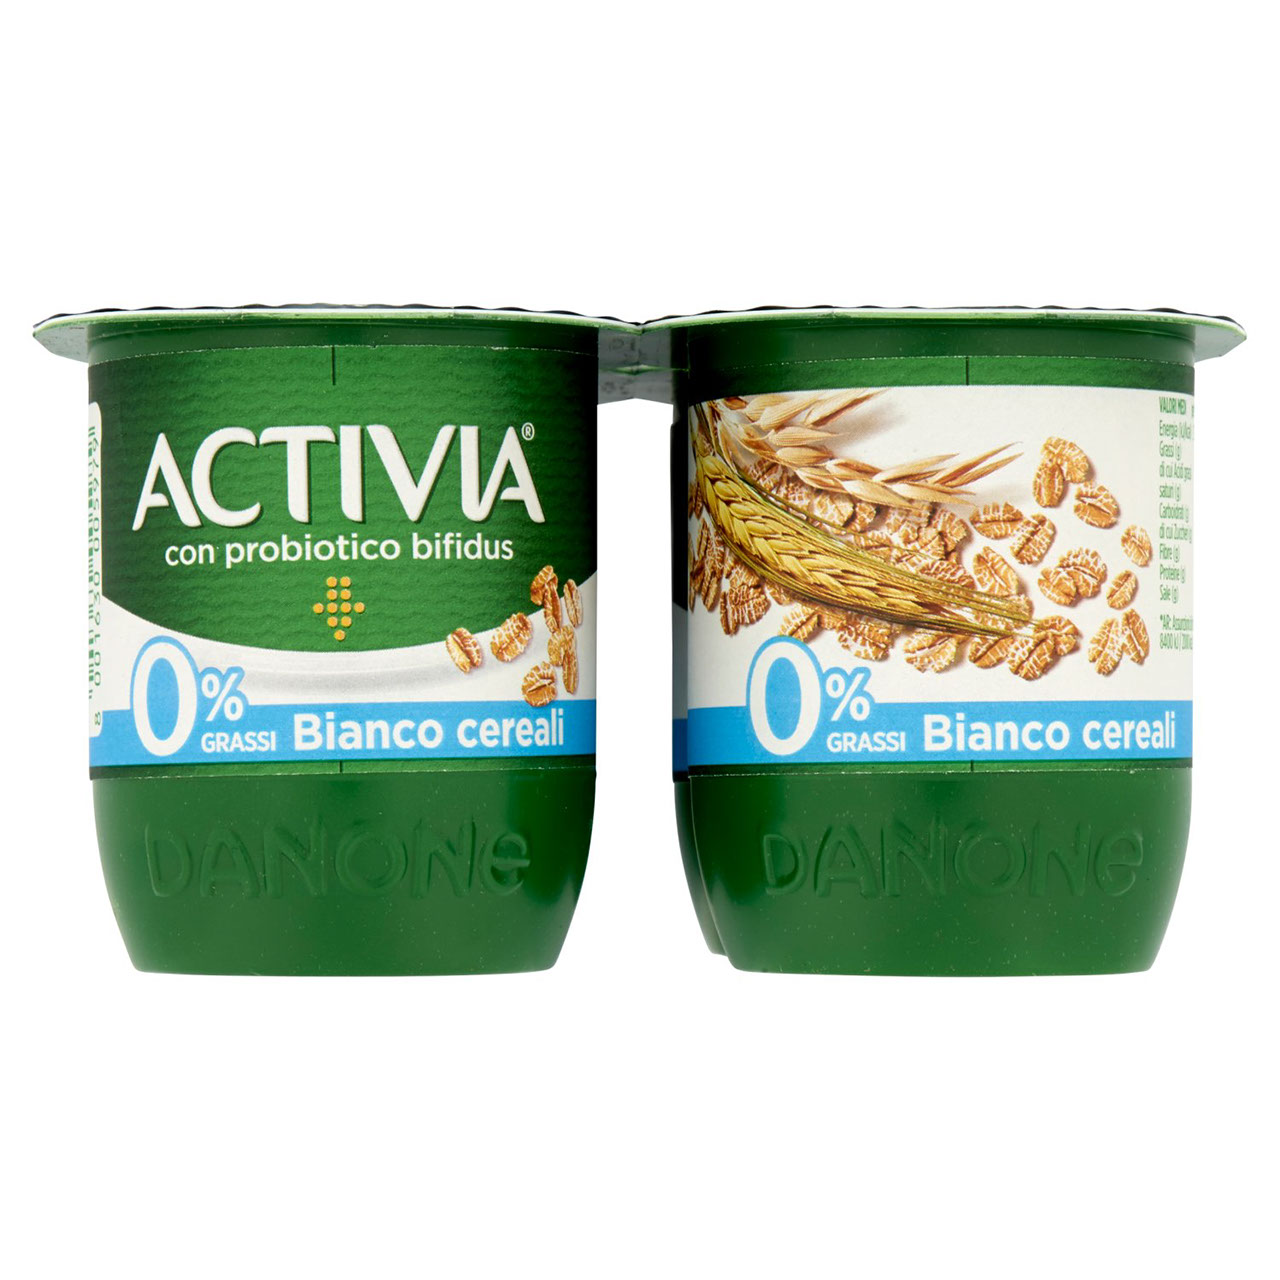 Activia 0% Grassi Bianco cereali 4 x 125 g